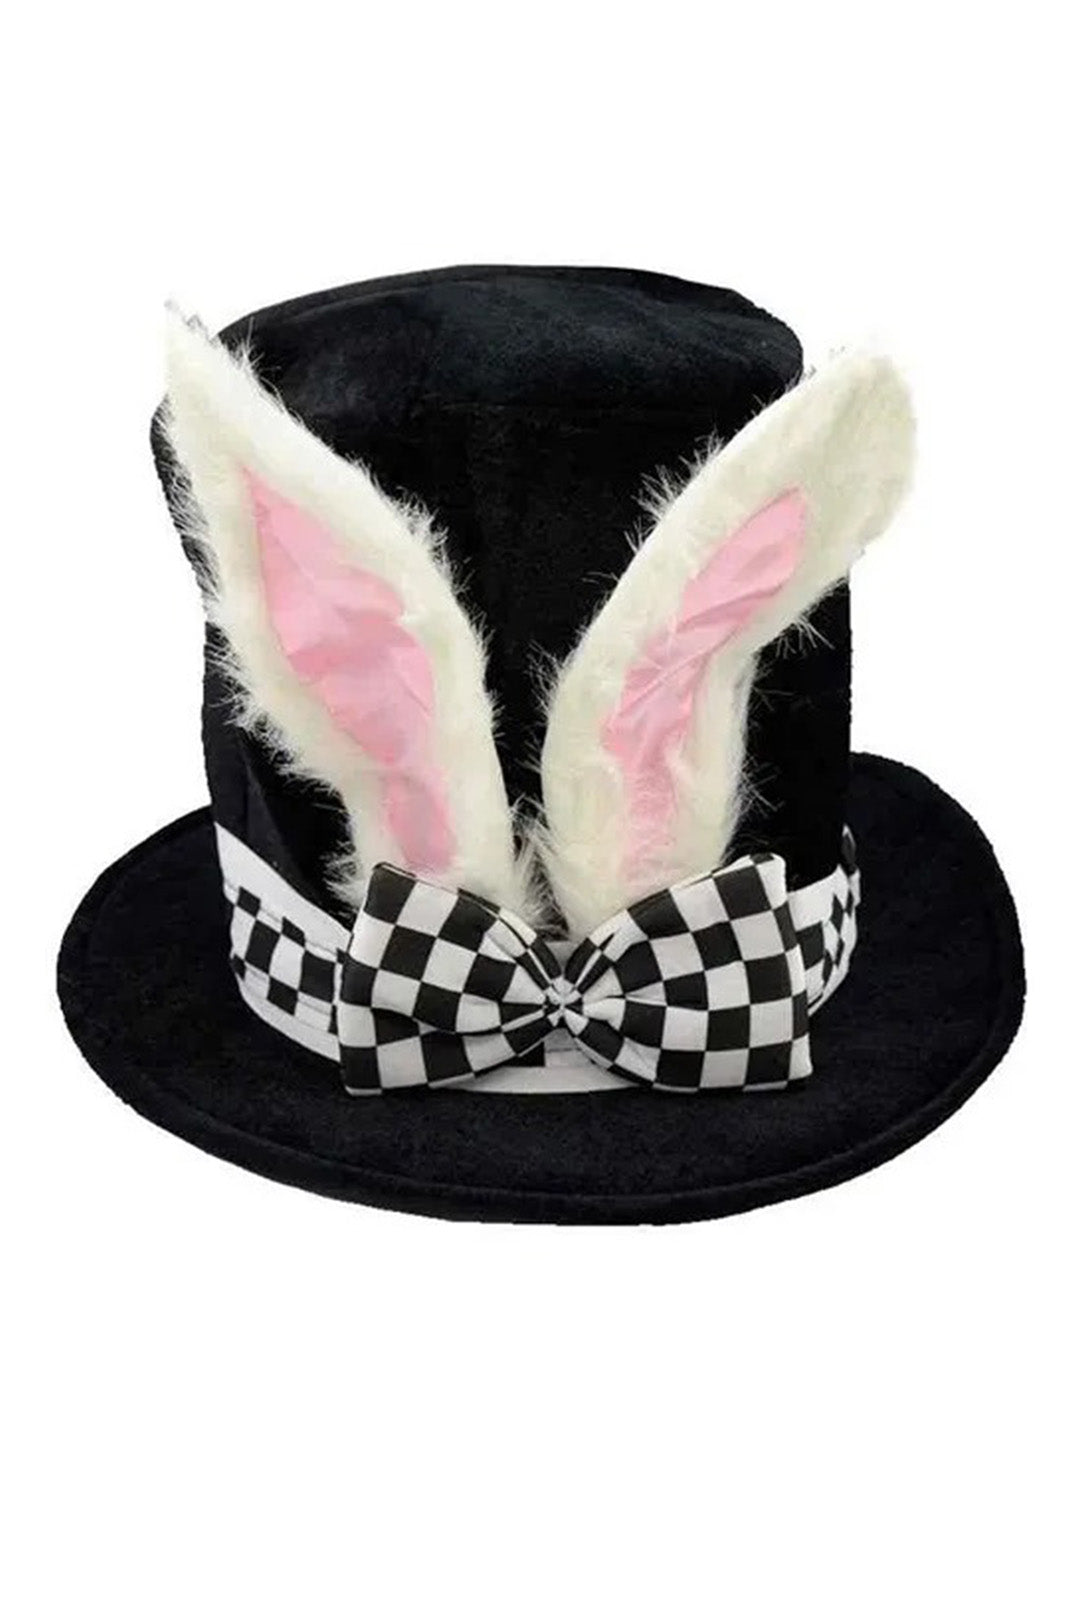 Mad Hatter Rabbit Ear Hat